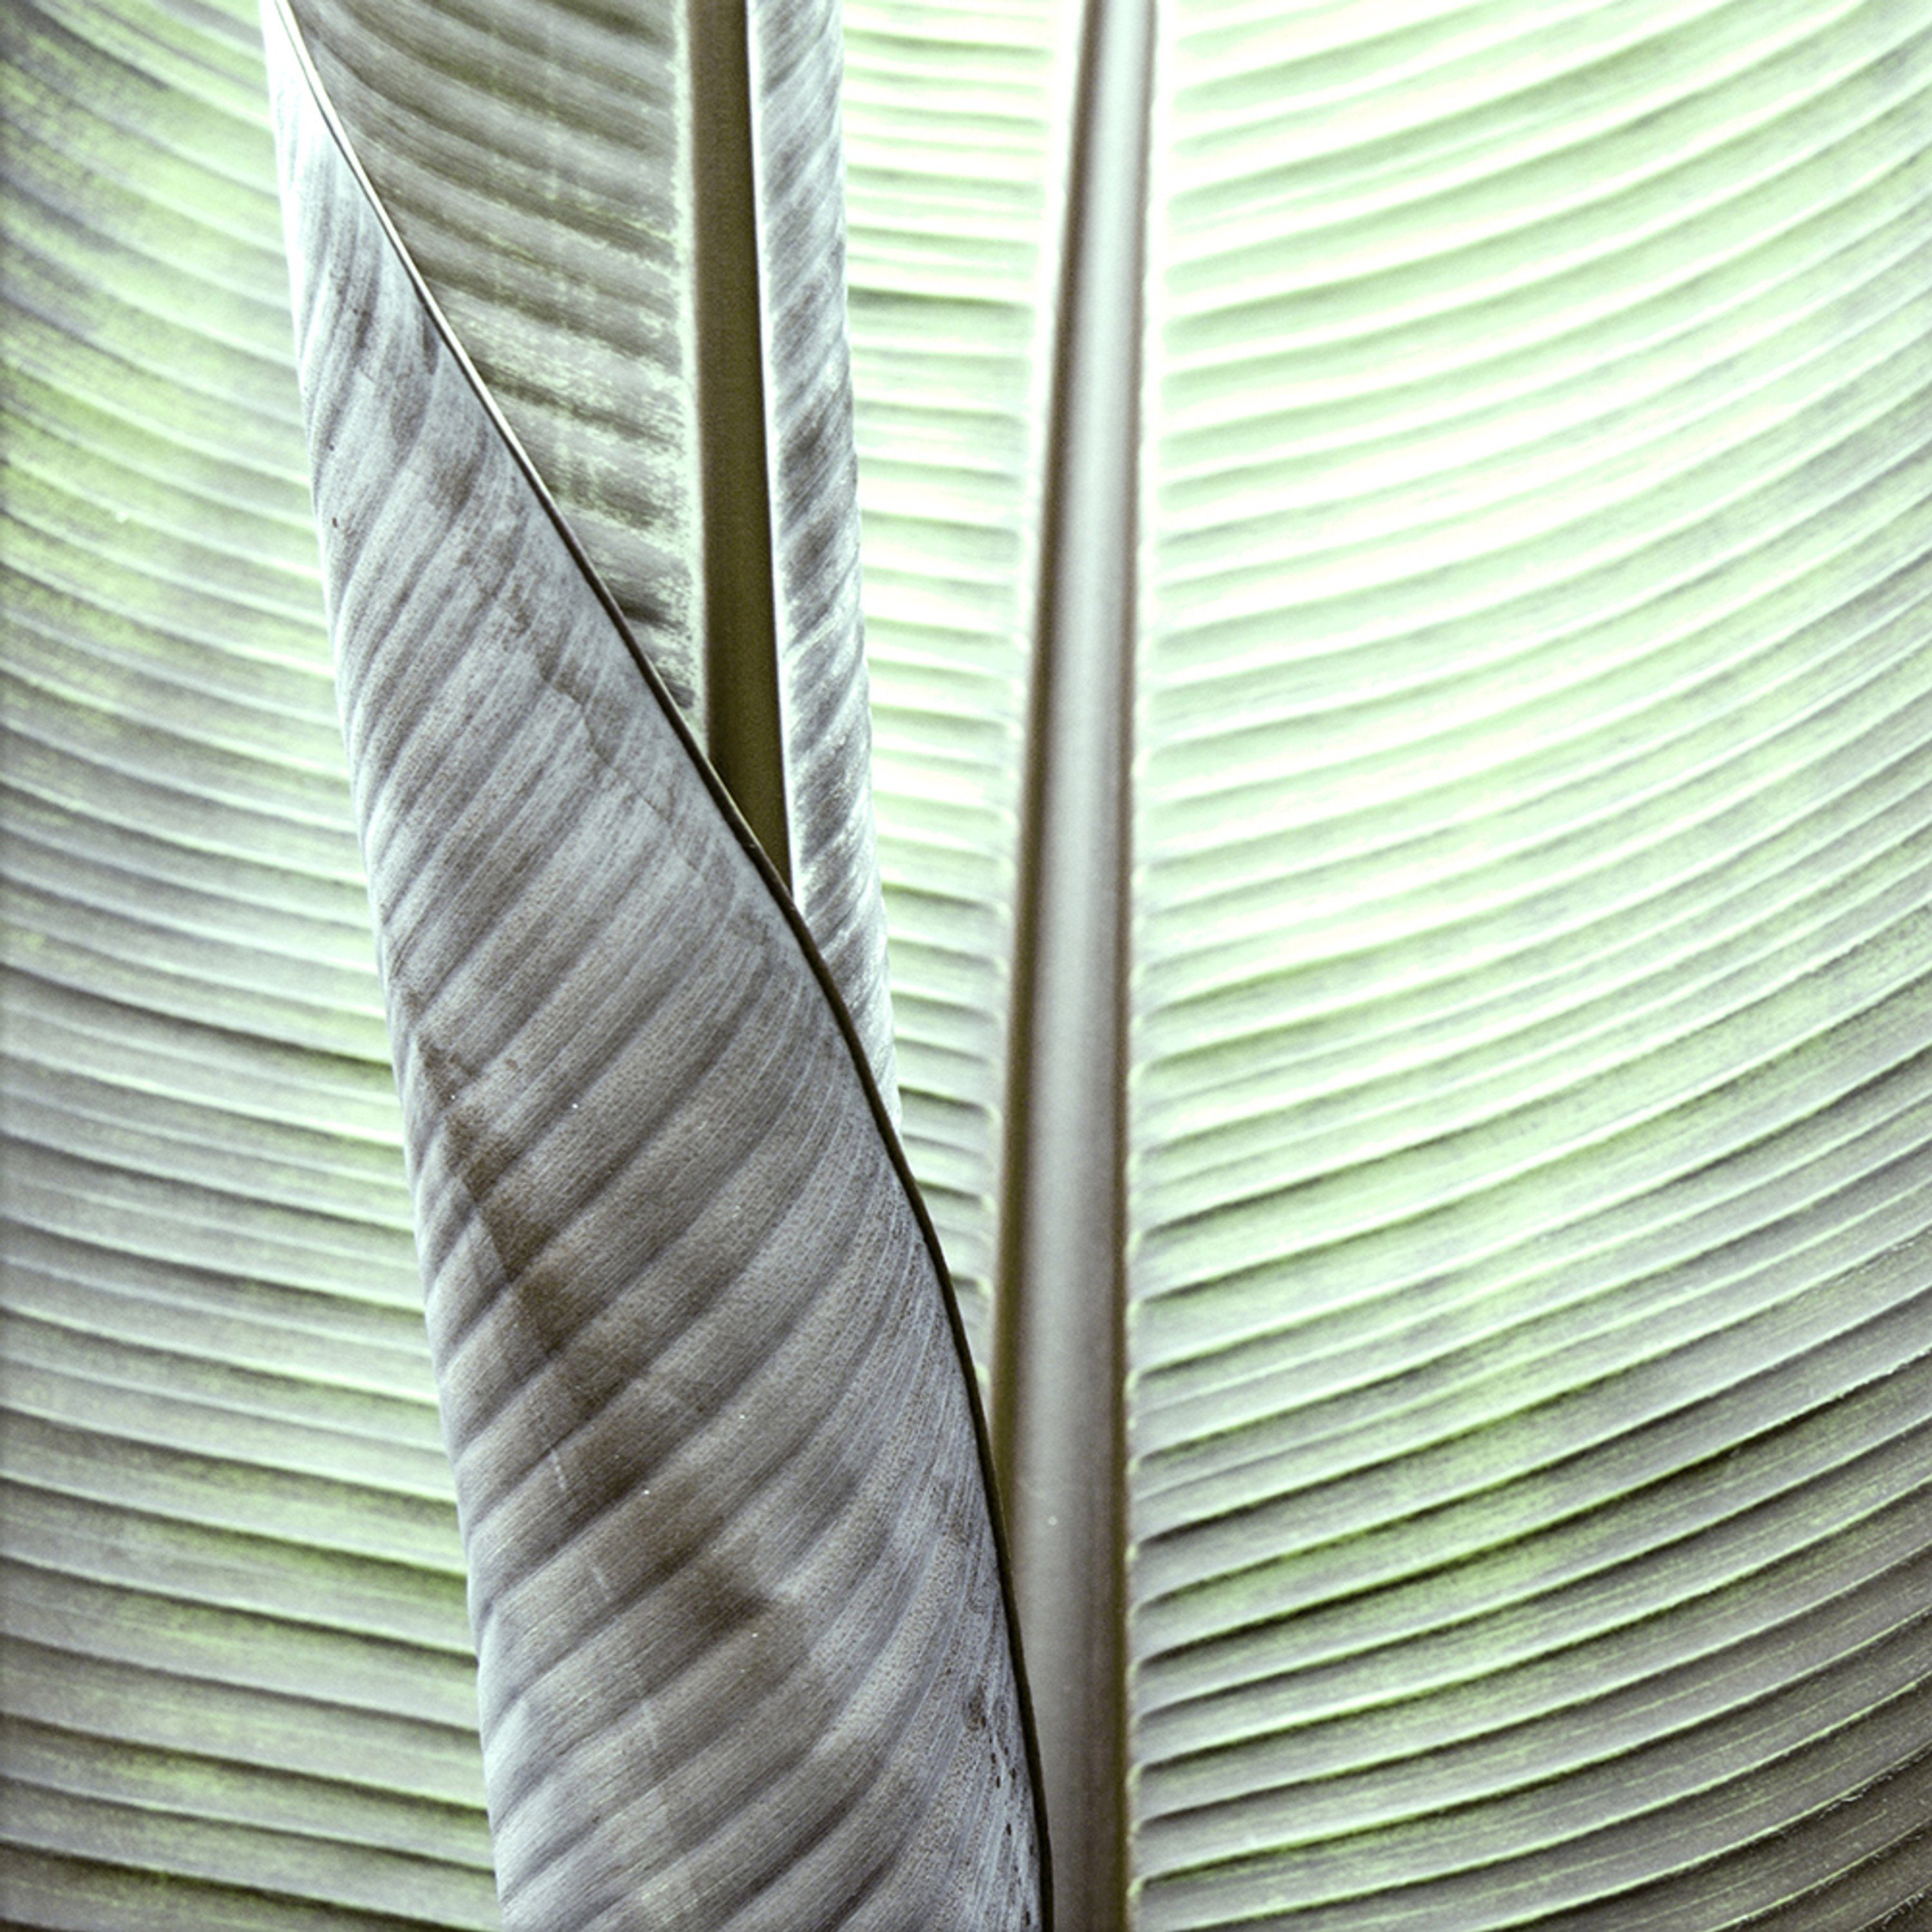 Grünes Blatt Natur: Glasbild Natur artissimo grün 30x30cm Bild Glasbild Blatt Tropical,